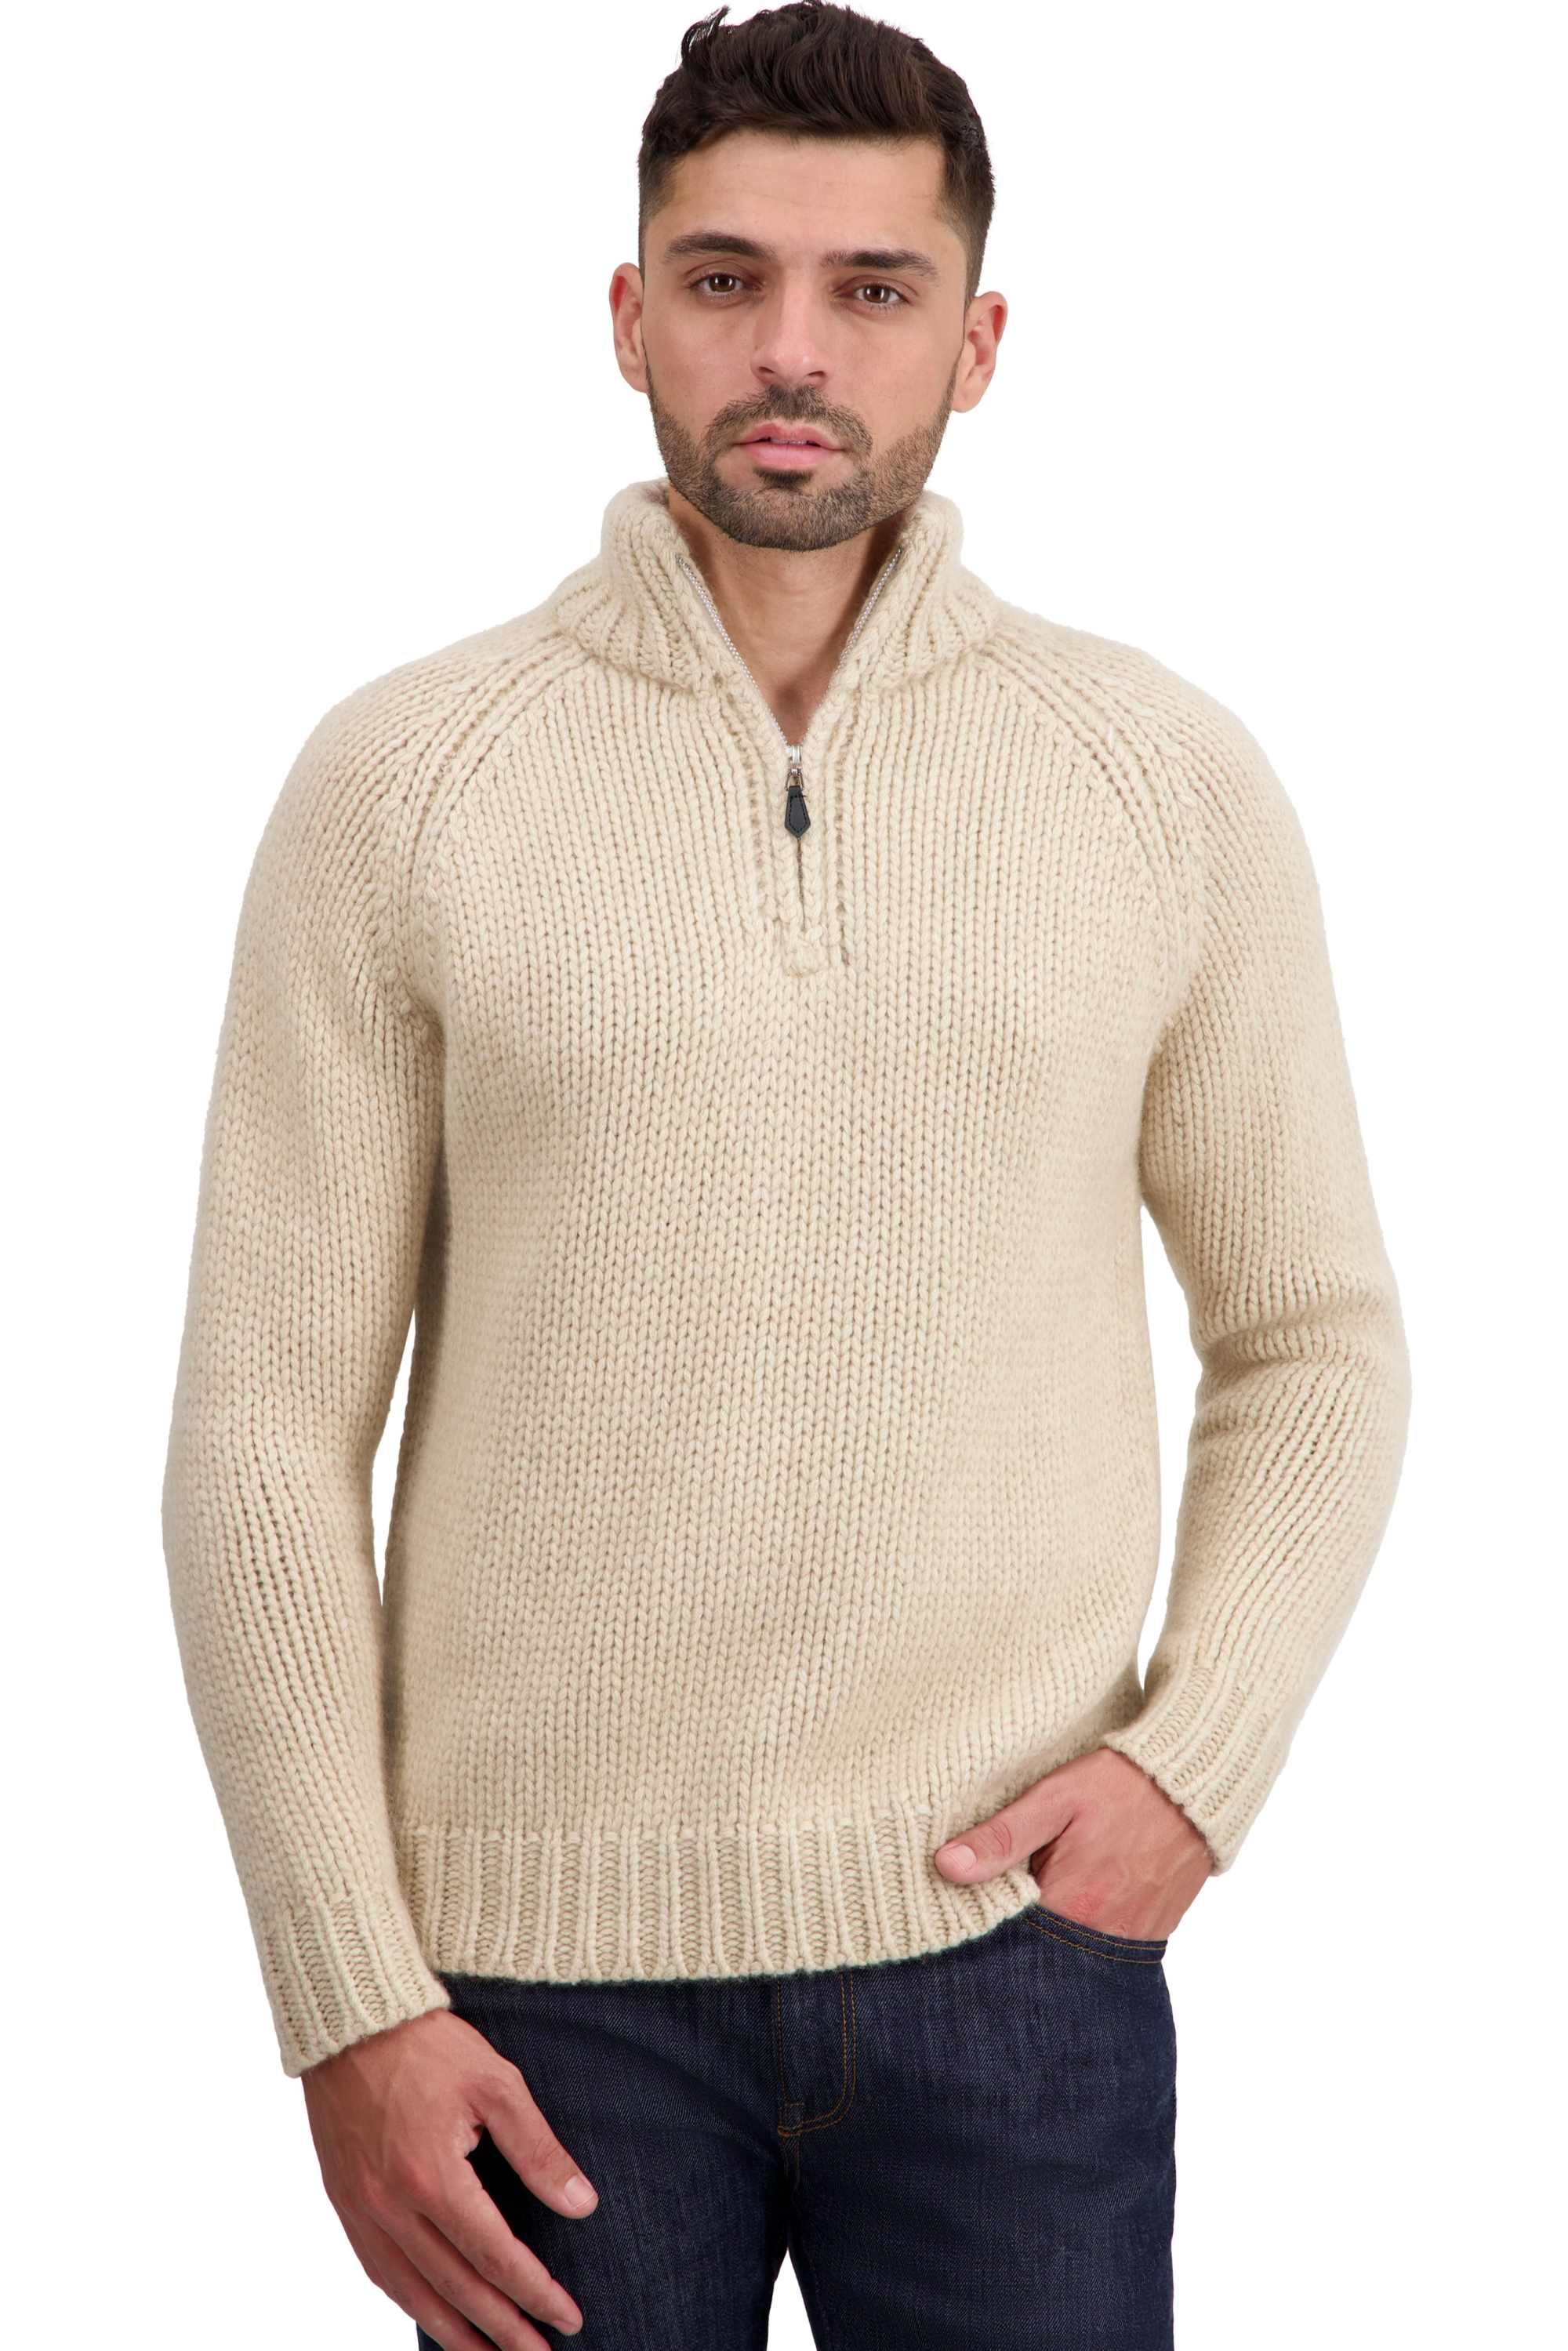 Cashmere men chunky sweater tripoli natural winter dawn natural beige 3xl